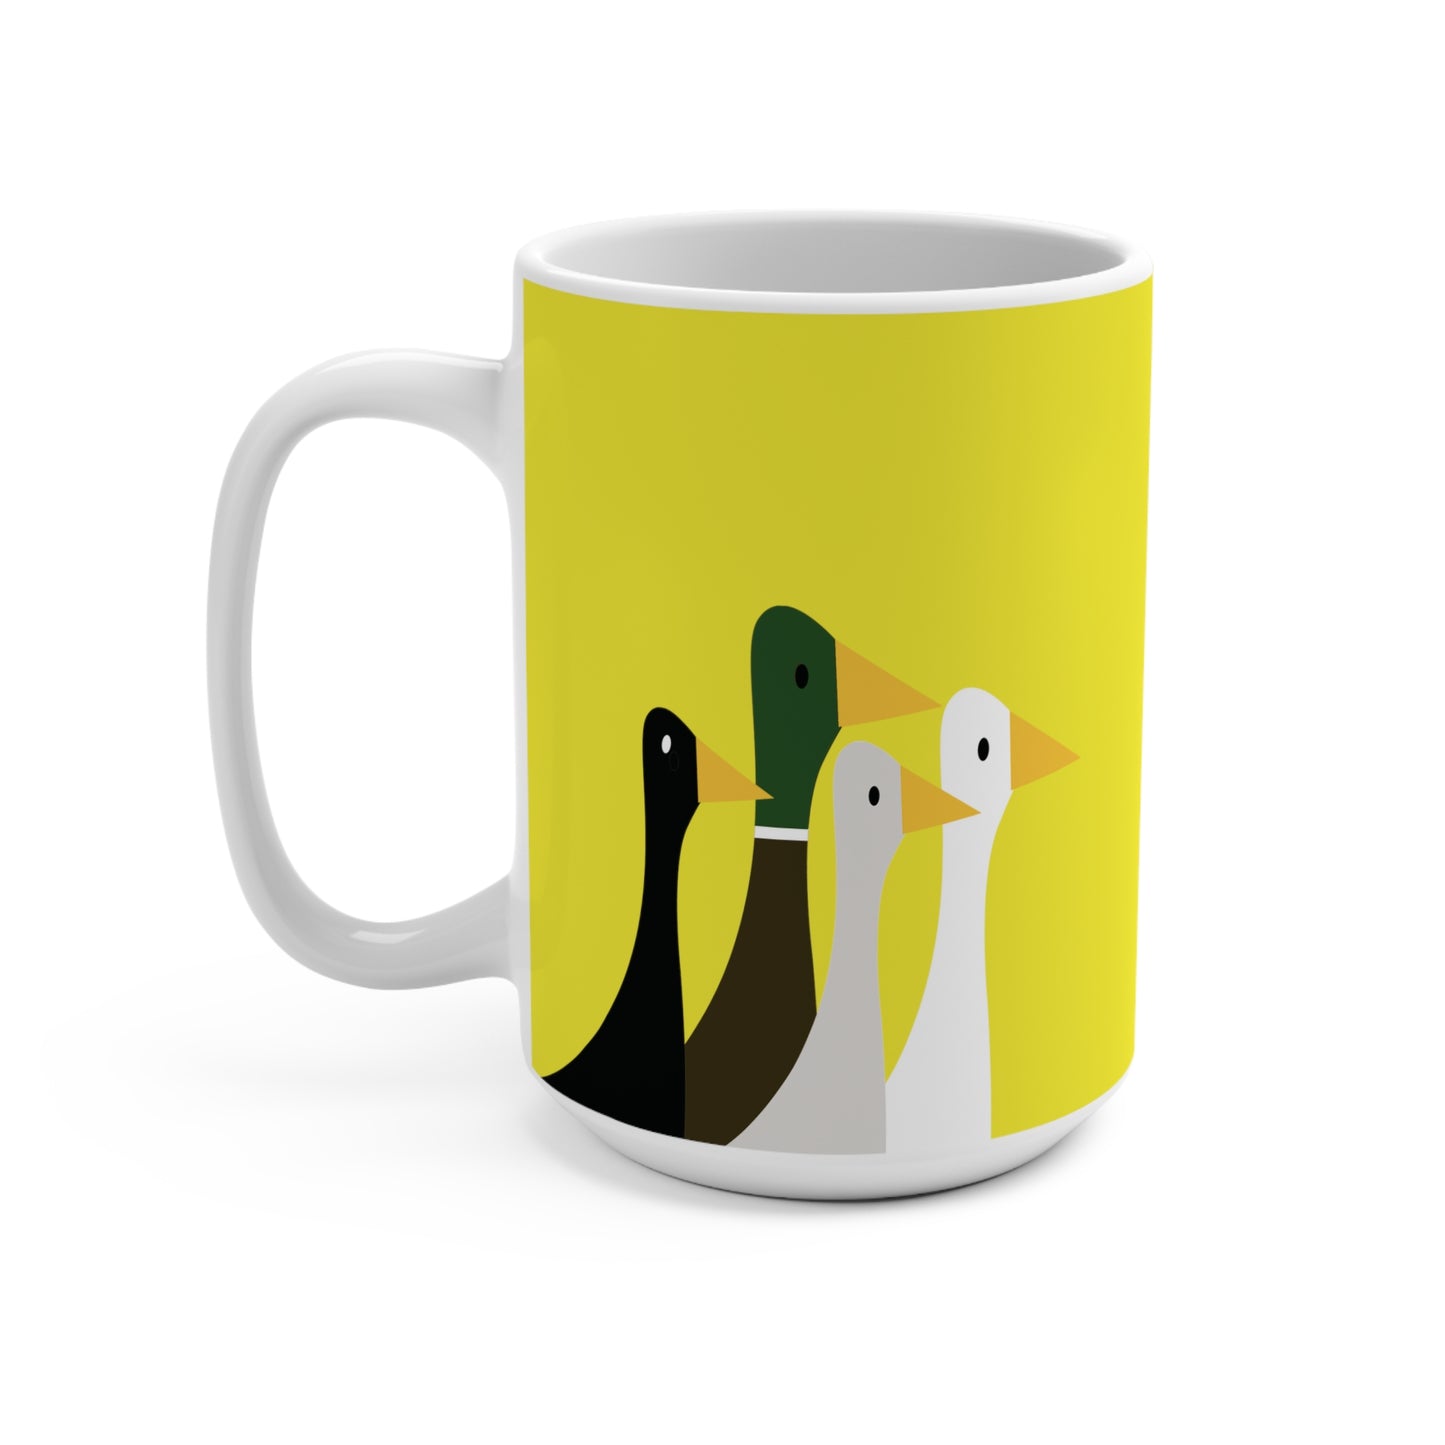 Take the ducks with you - Yellow fff800 - Mug 15oz